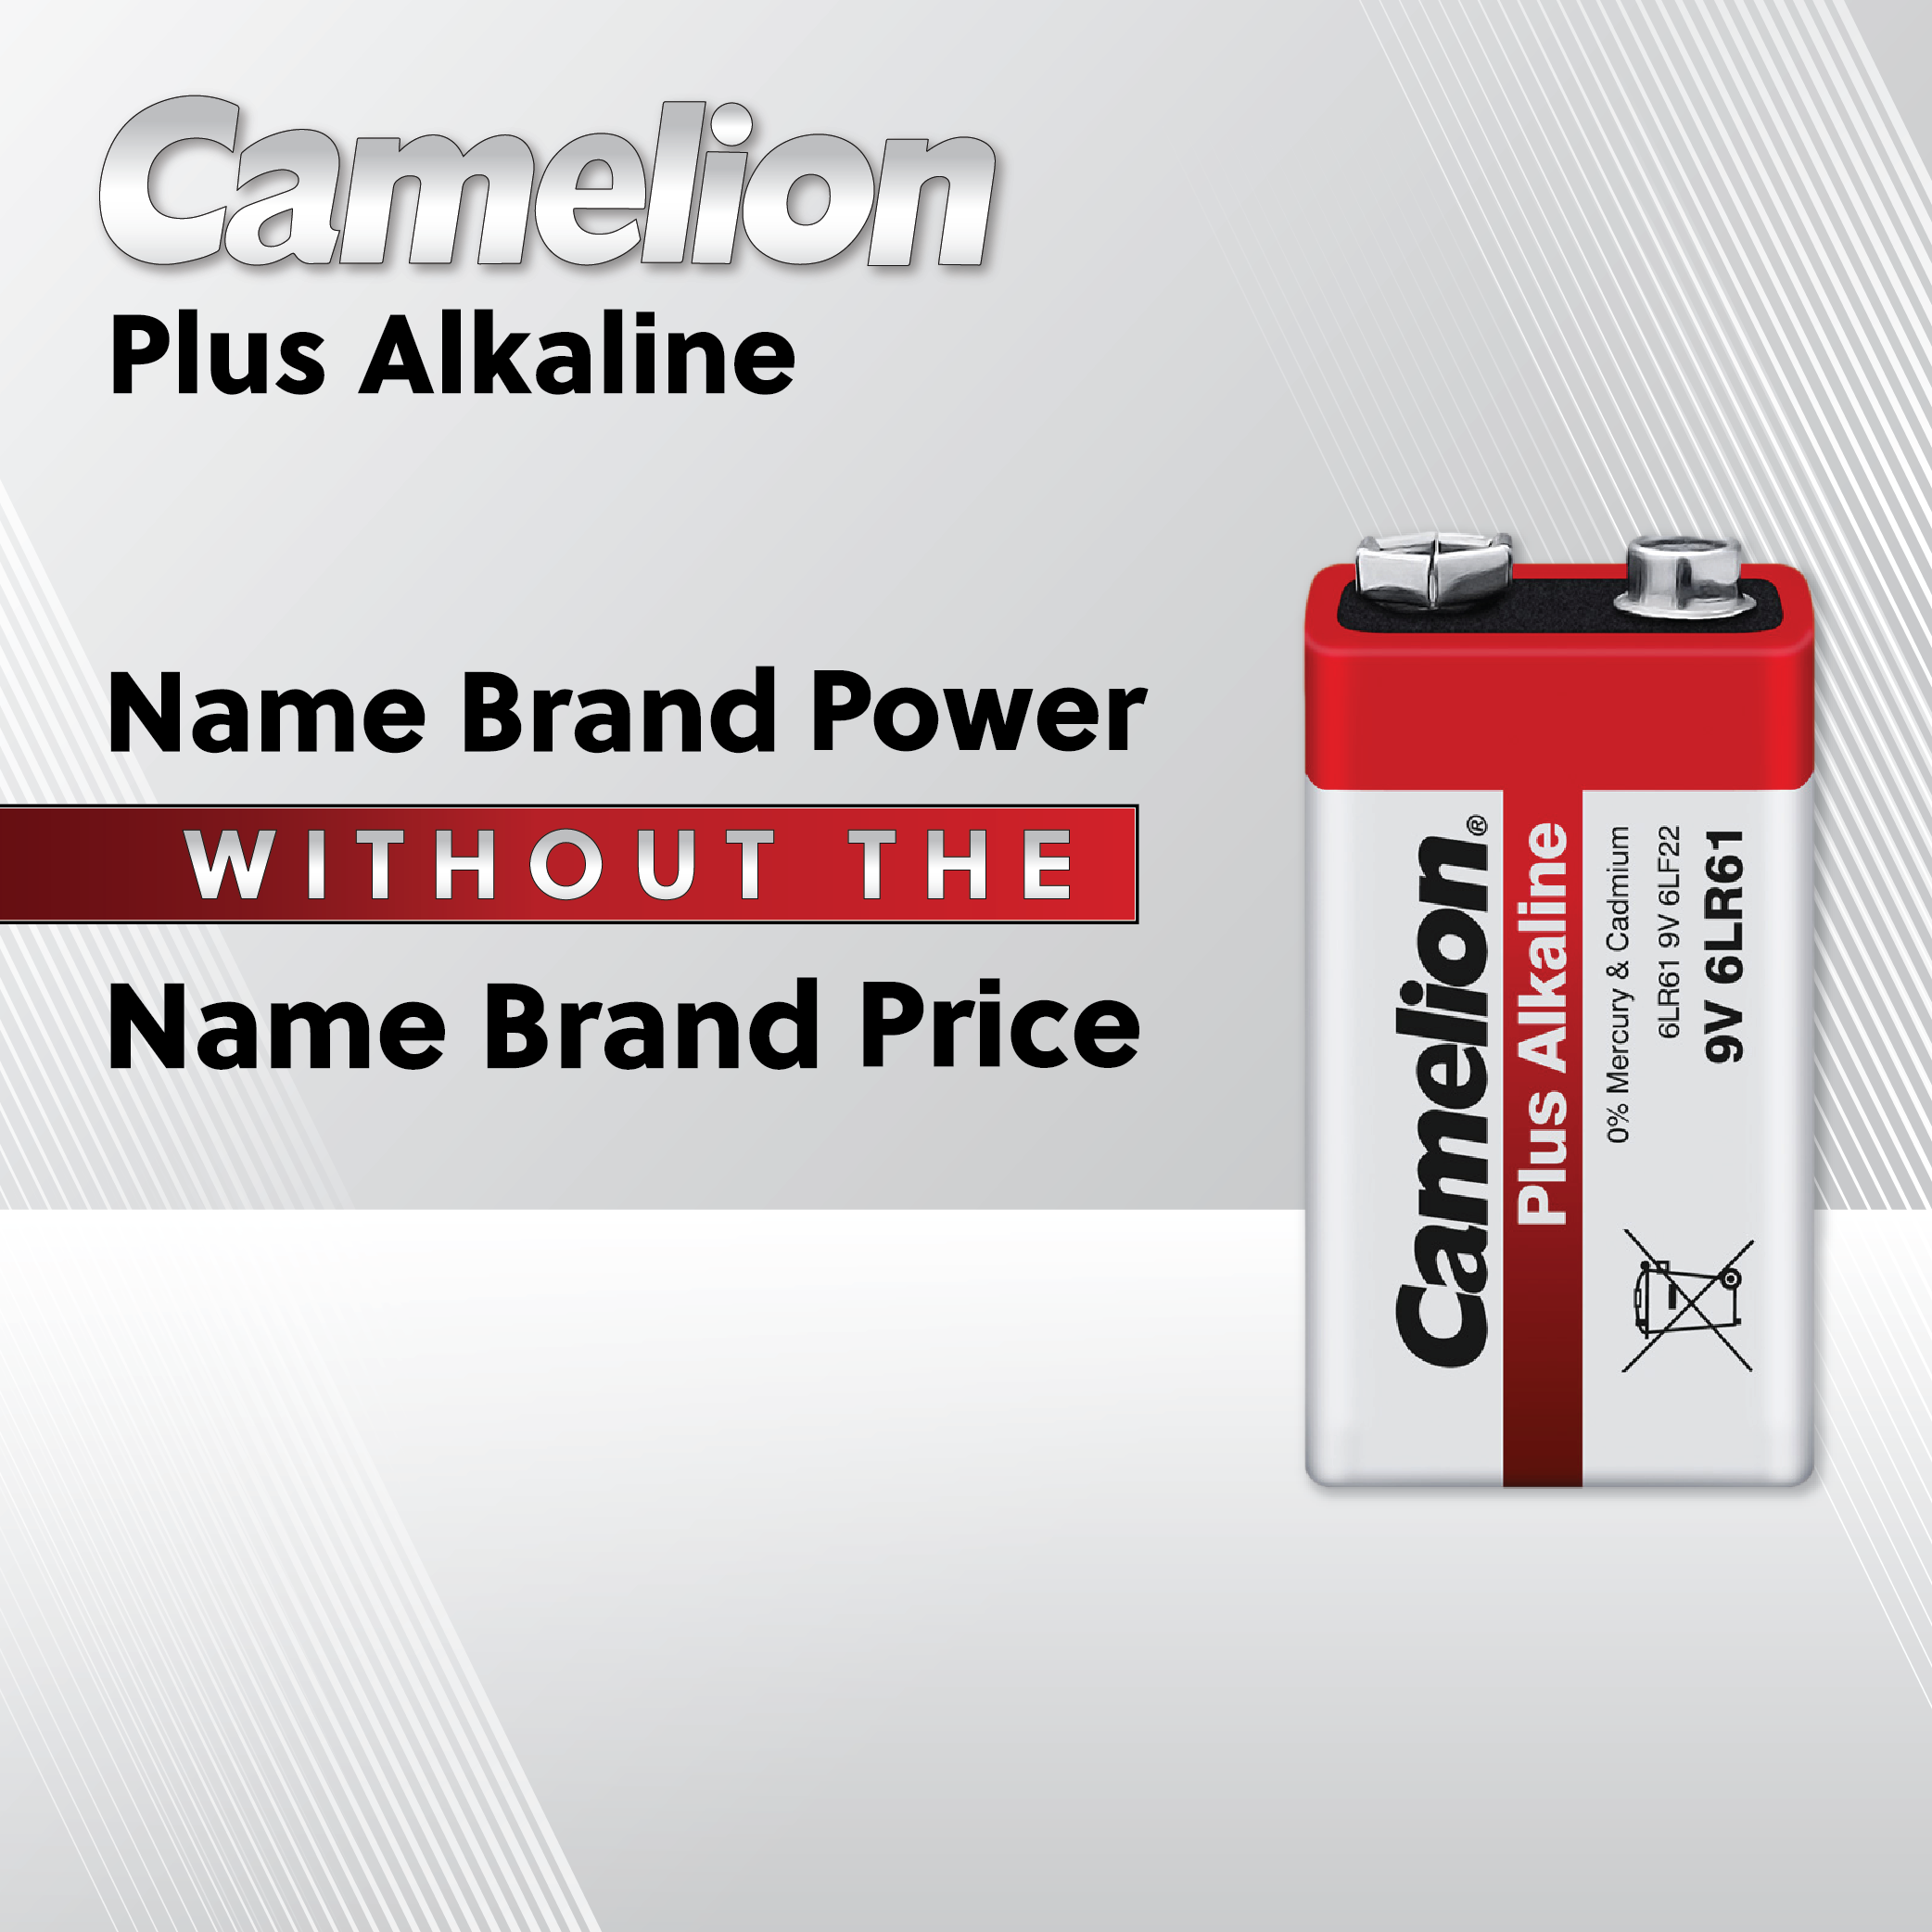 Camelion AAA Plus Alkaline 4+2